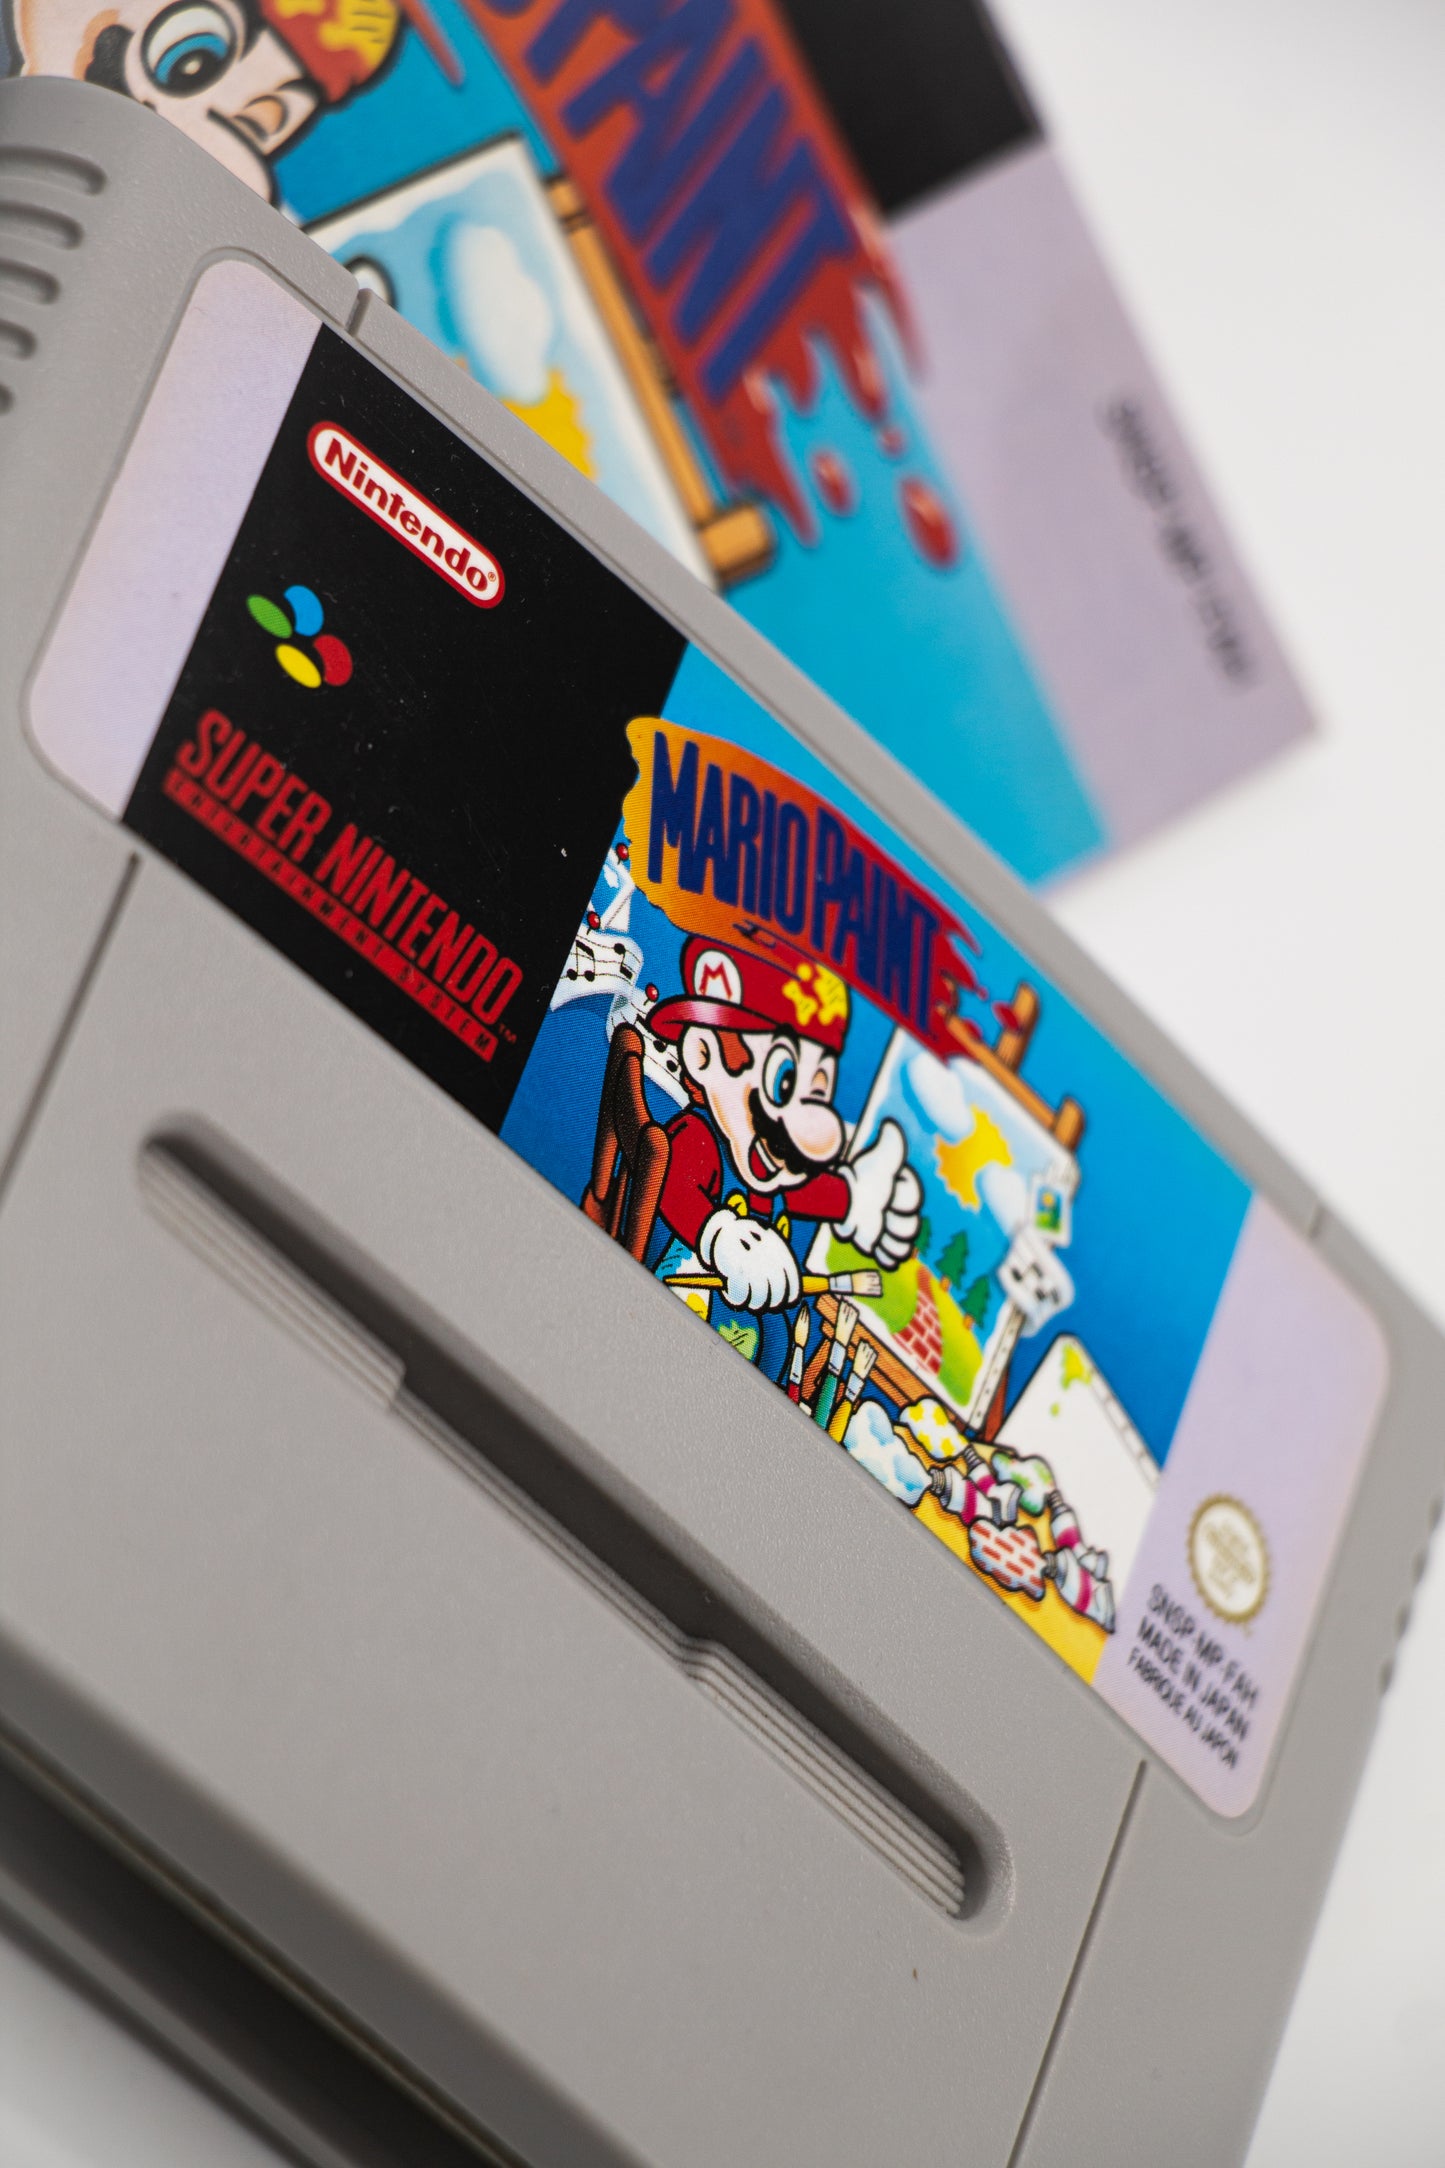 Mario Paint SNES Cartridge and Manual